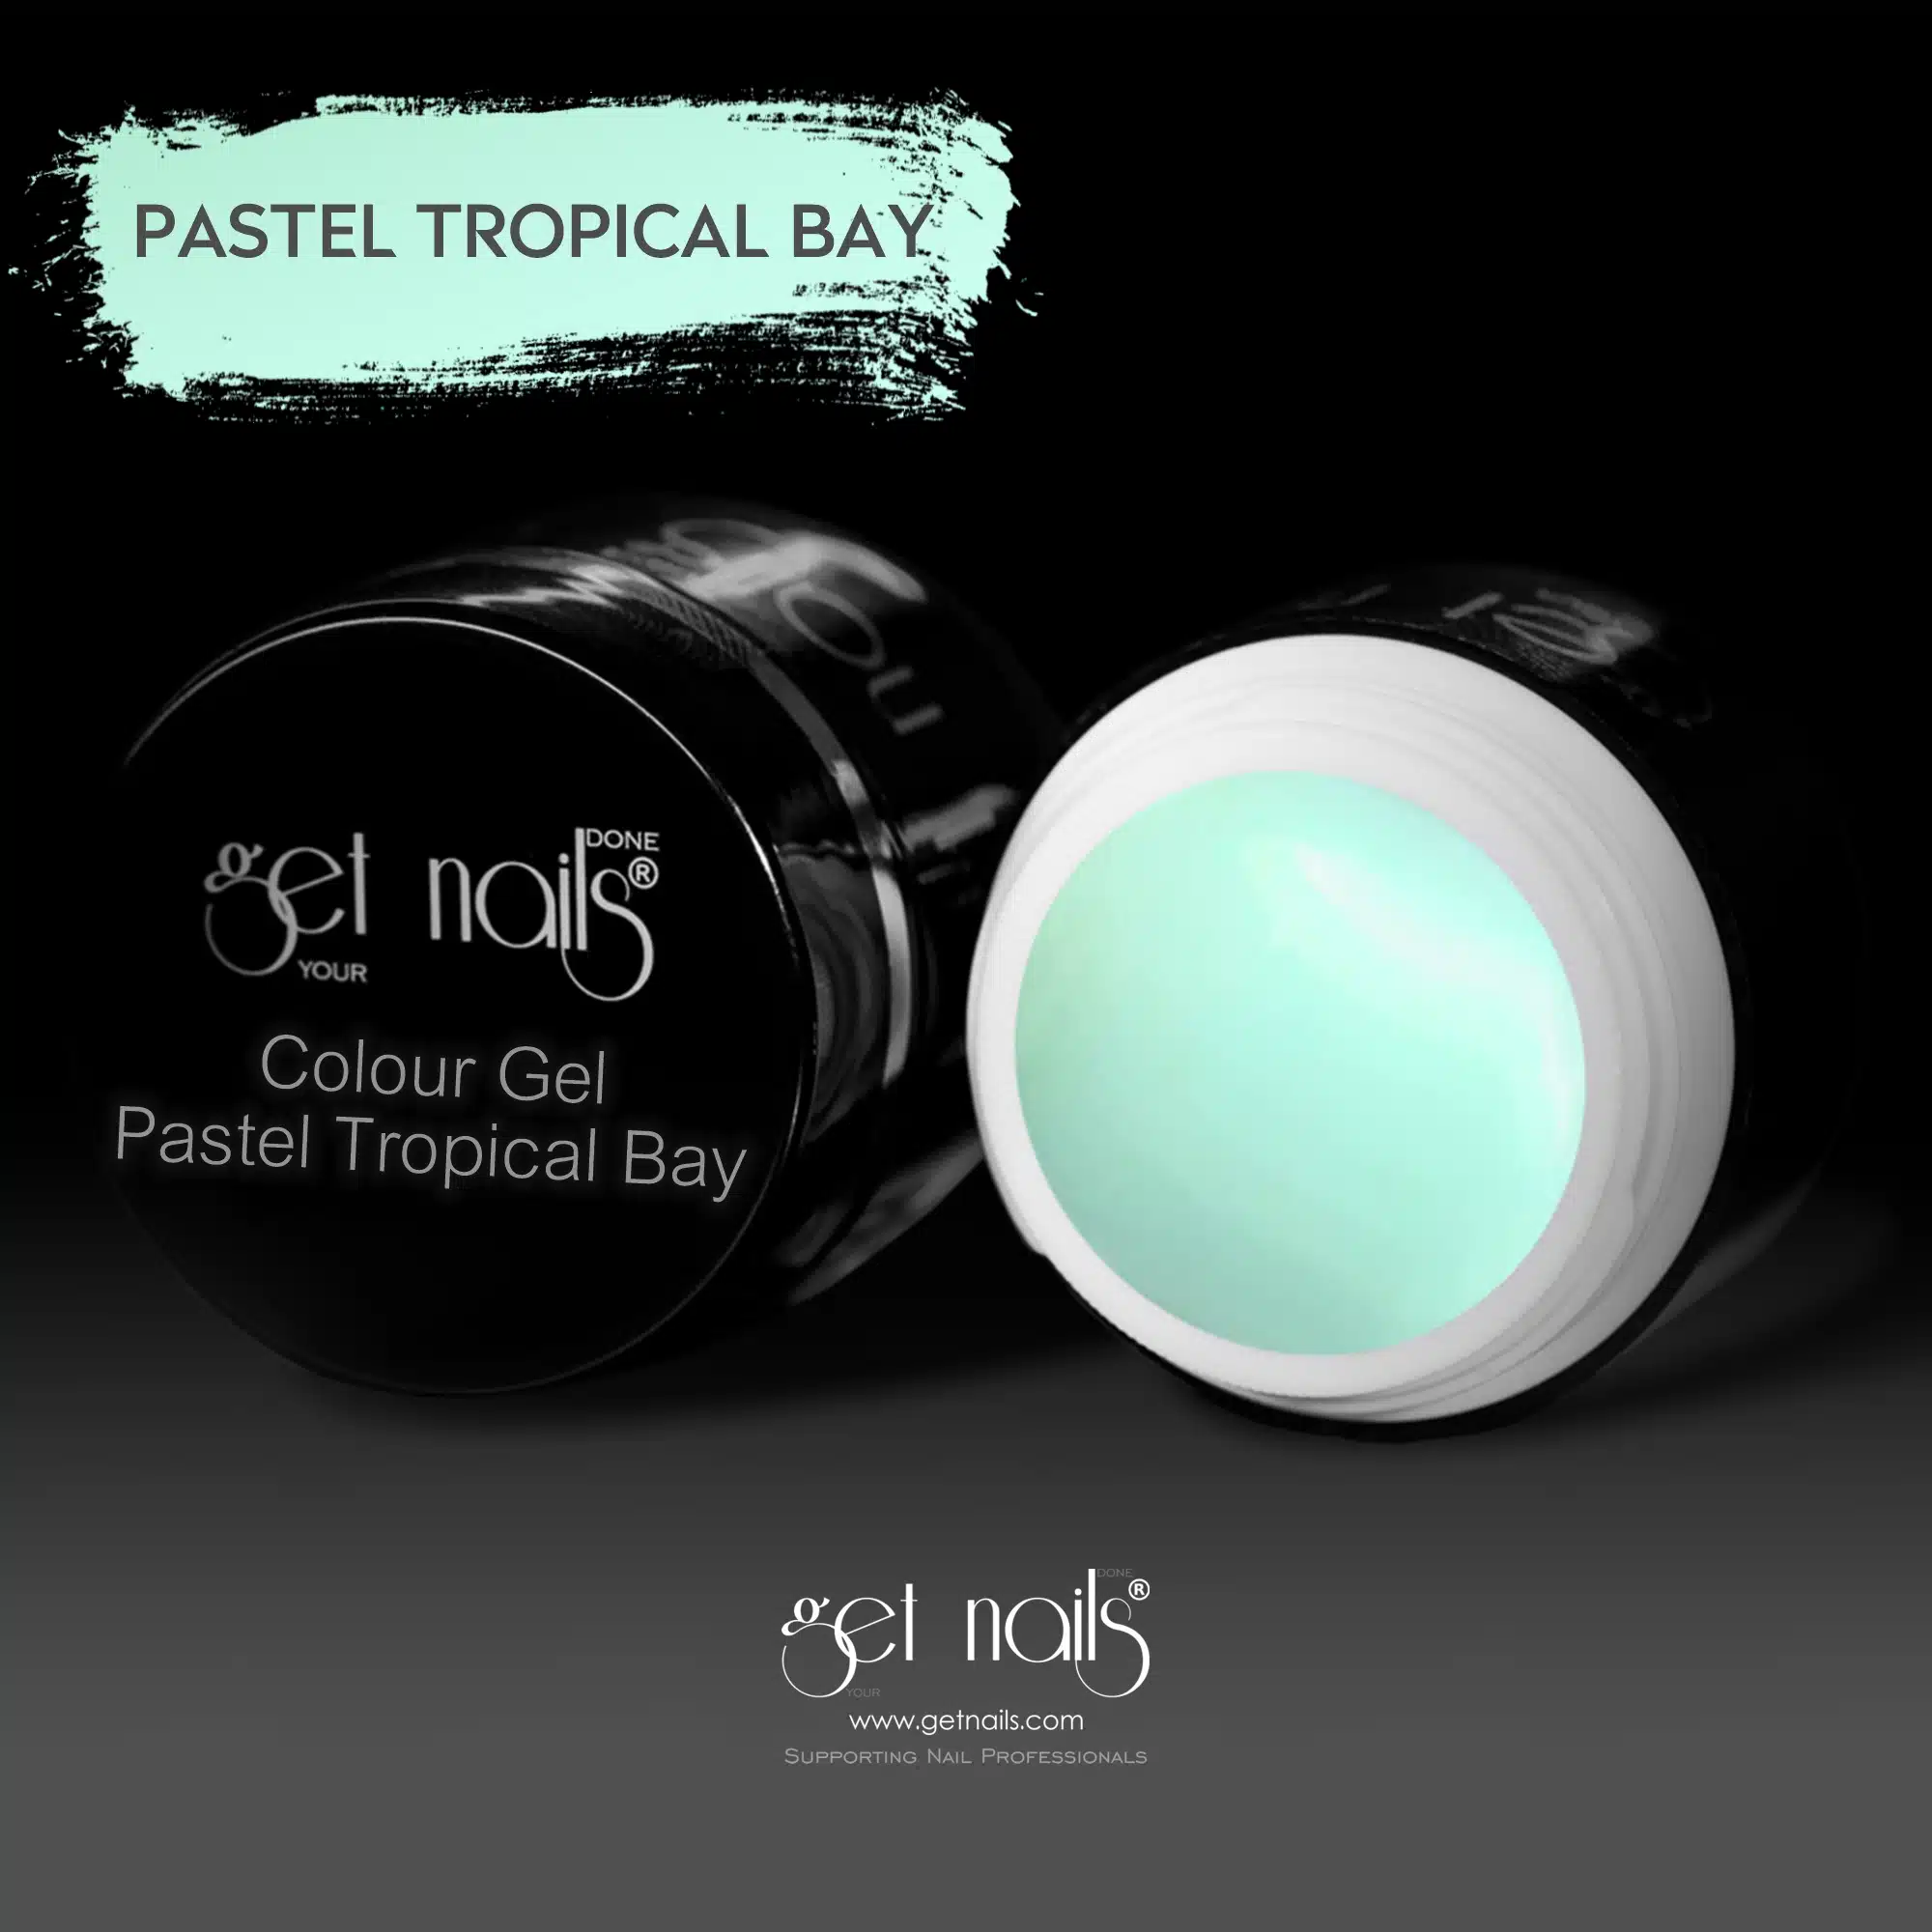 Get Nails Austria - Gel colorato Pastel Tropical Bay 5g